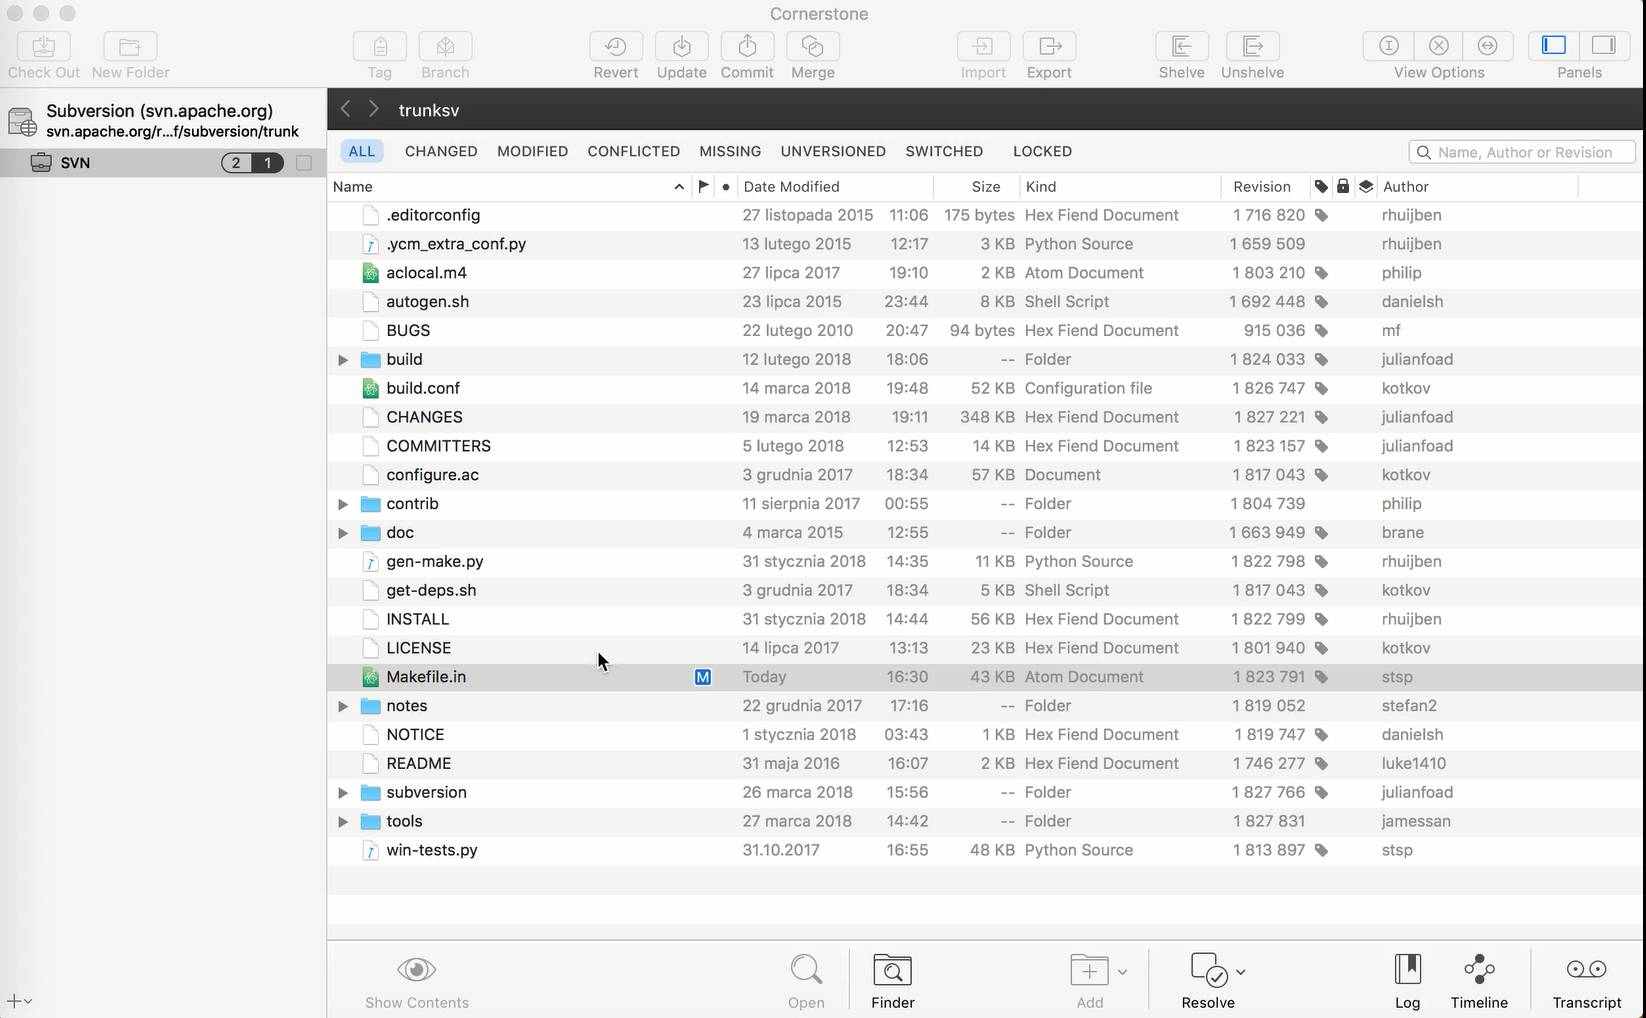 Download Cornerstone Svn For Mac